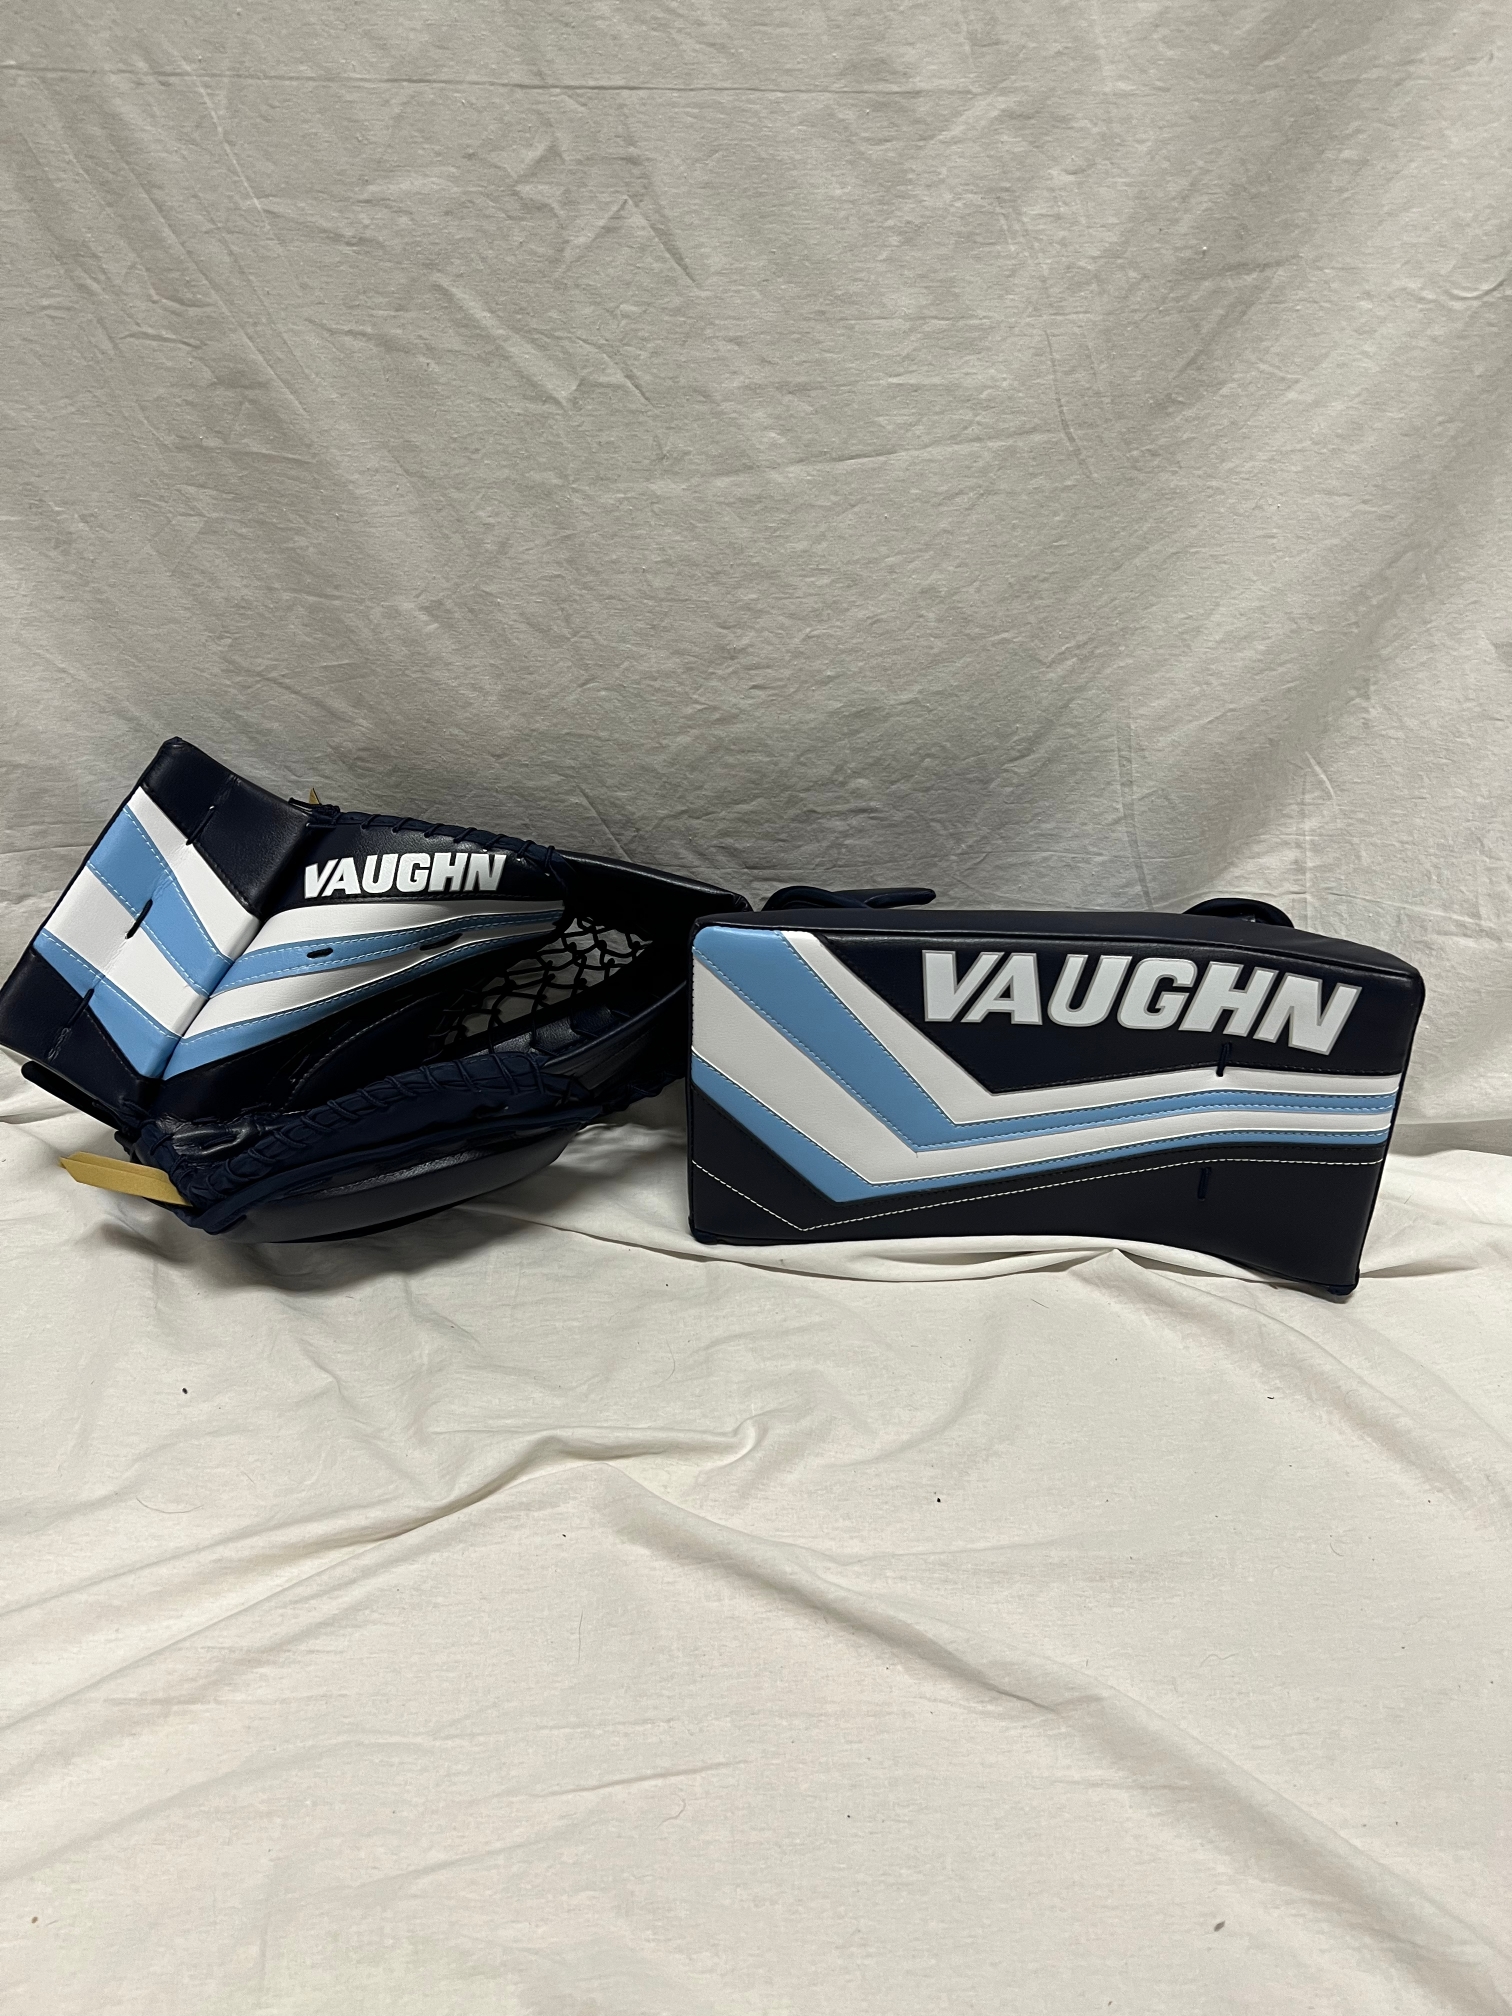 New Pro Return Vaughn SLR2 Glove Set